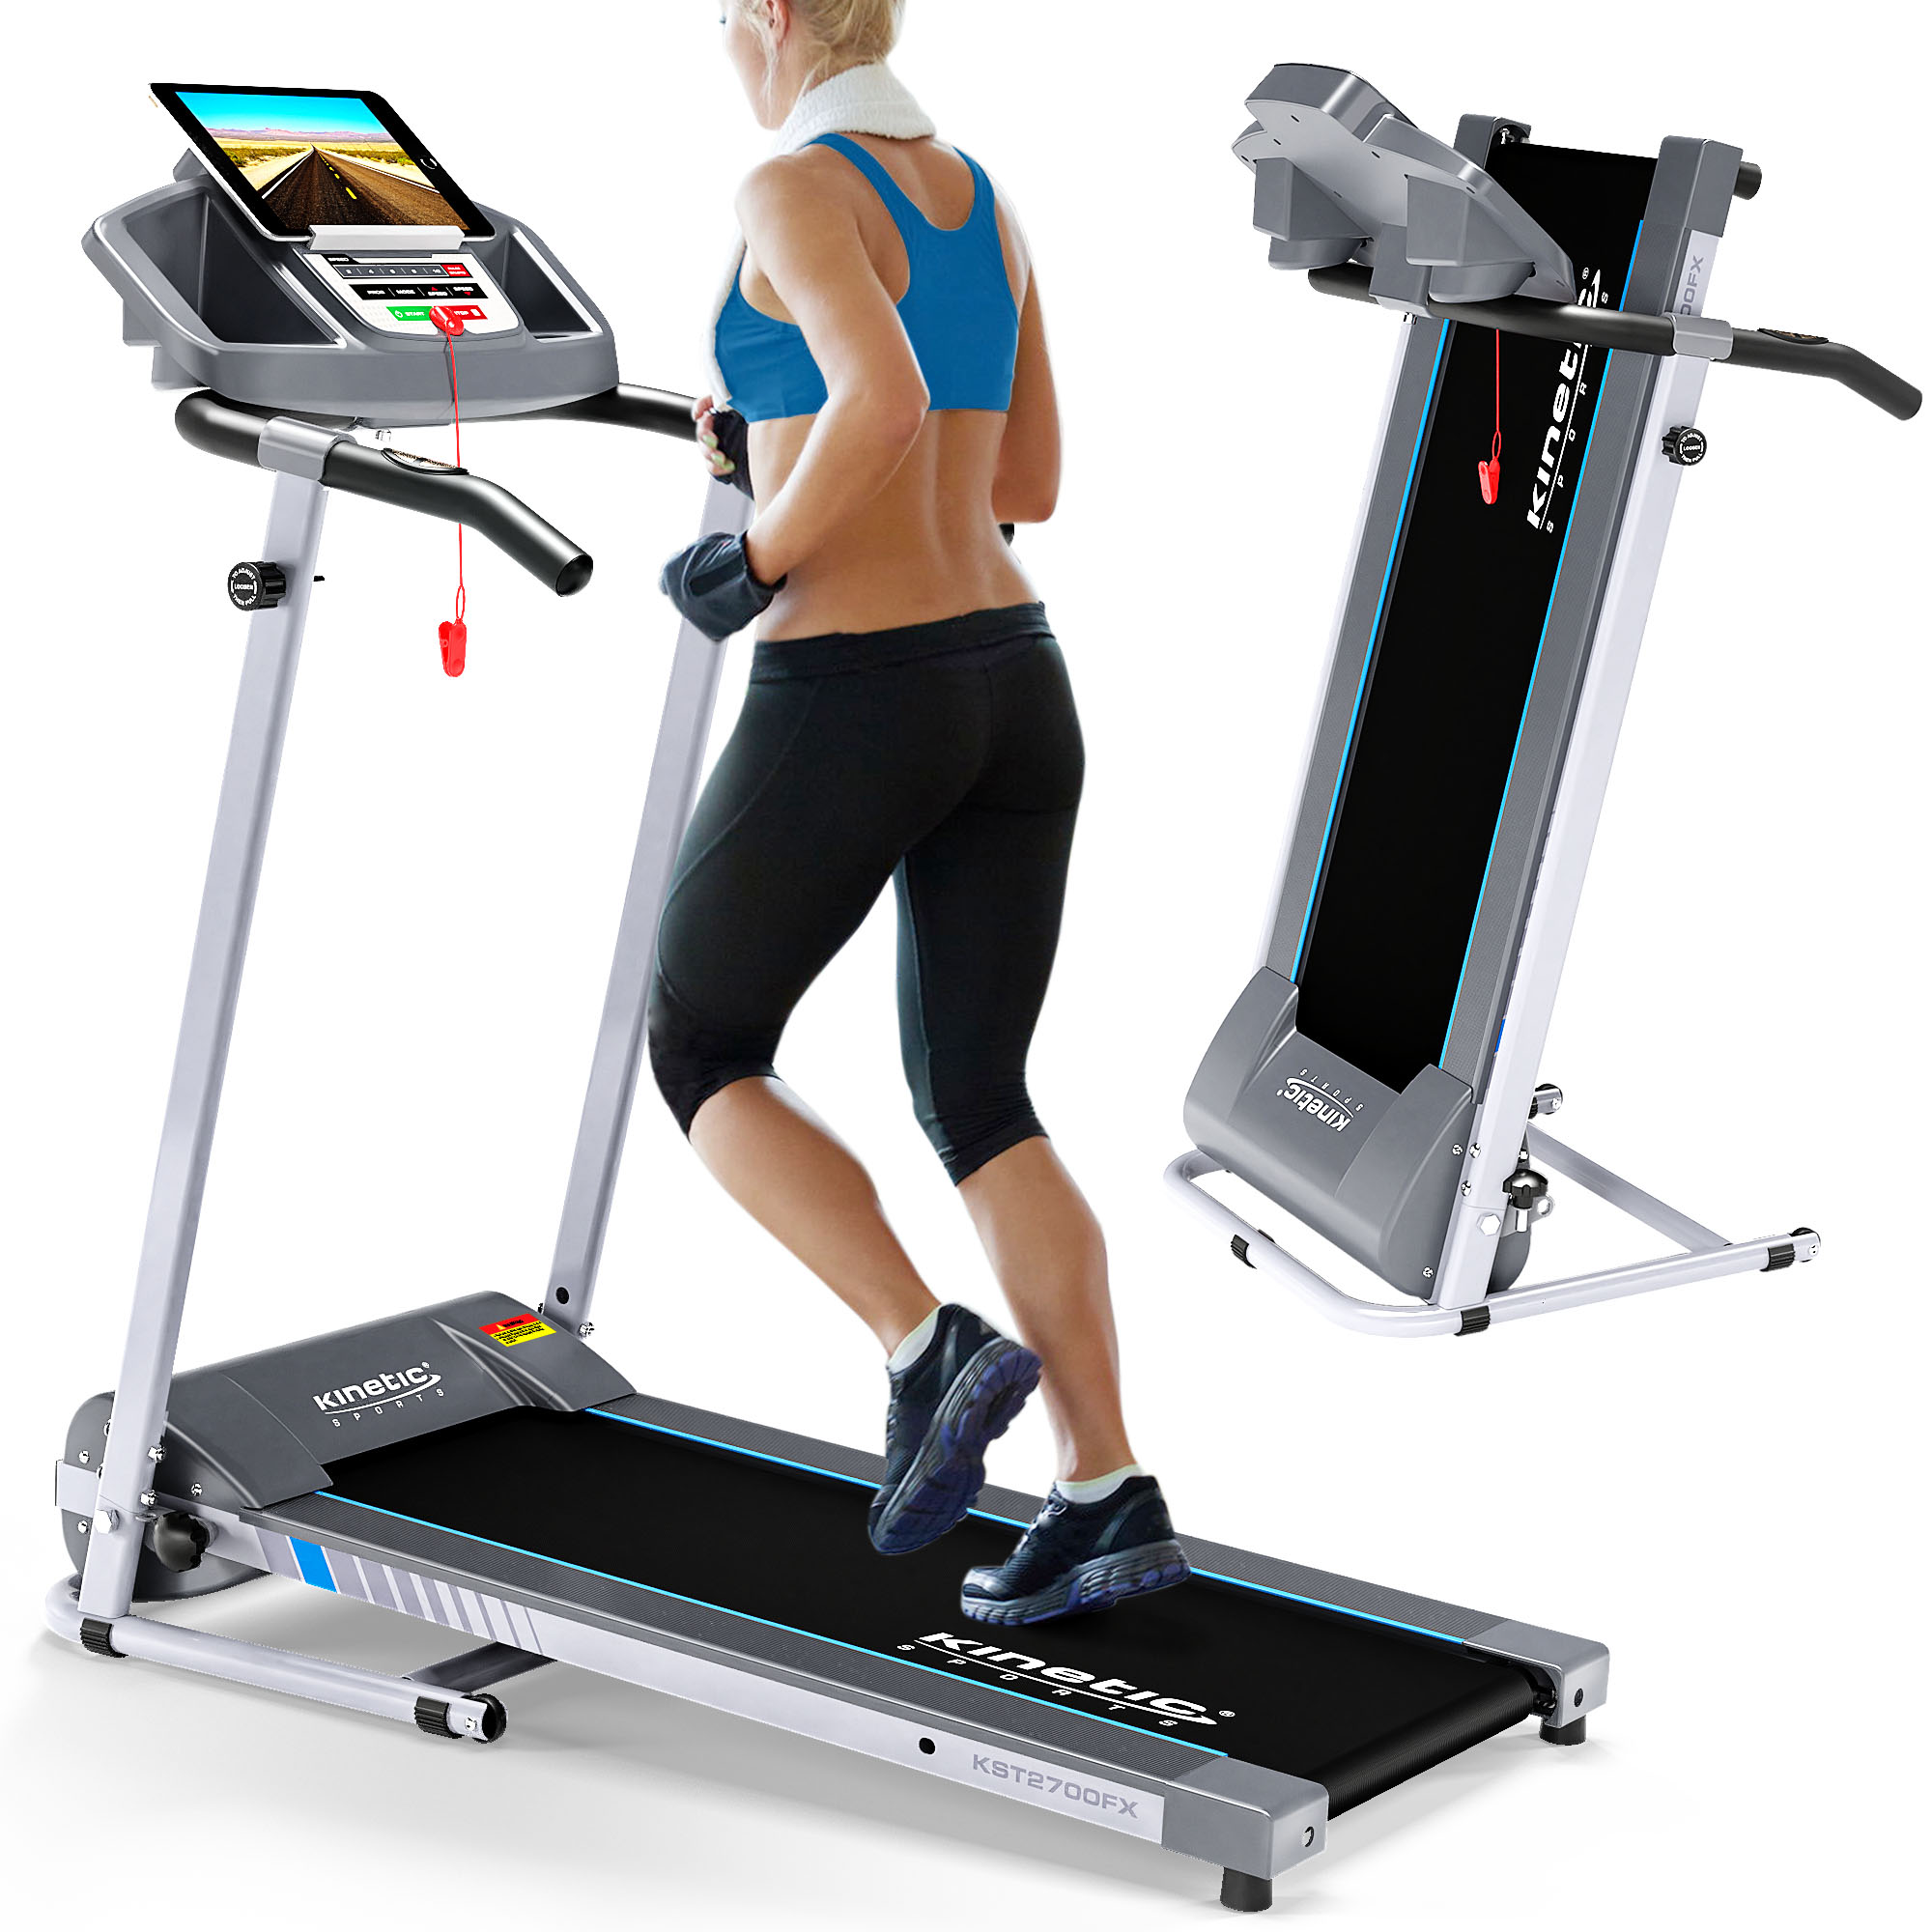 Laufband elektrisch 12 km/h LCD Display Puls Fitness Heimtrainer klappbar 125 kg